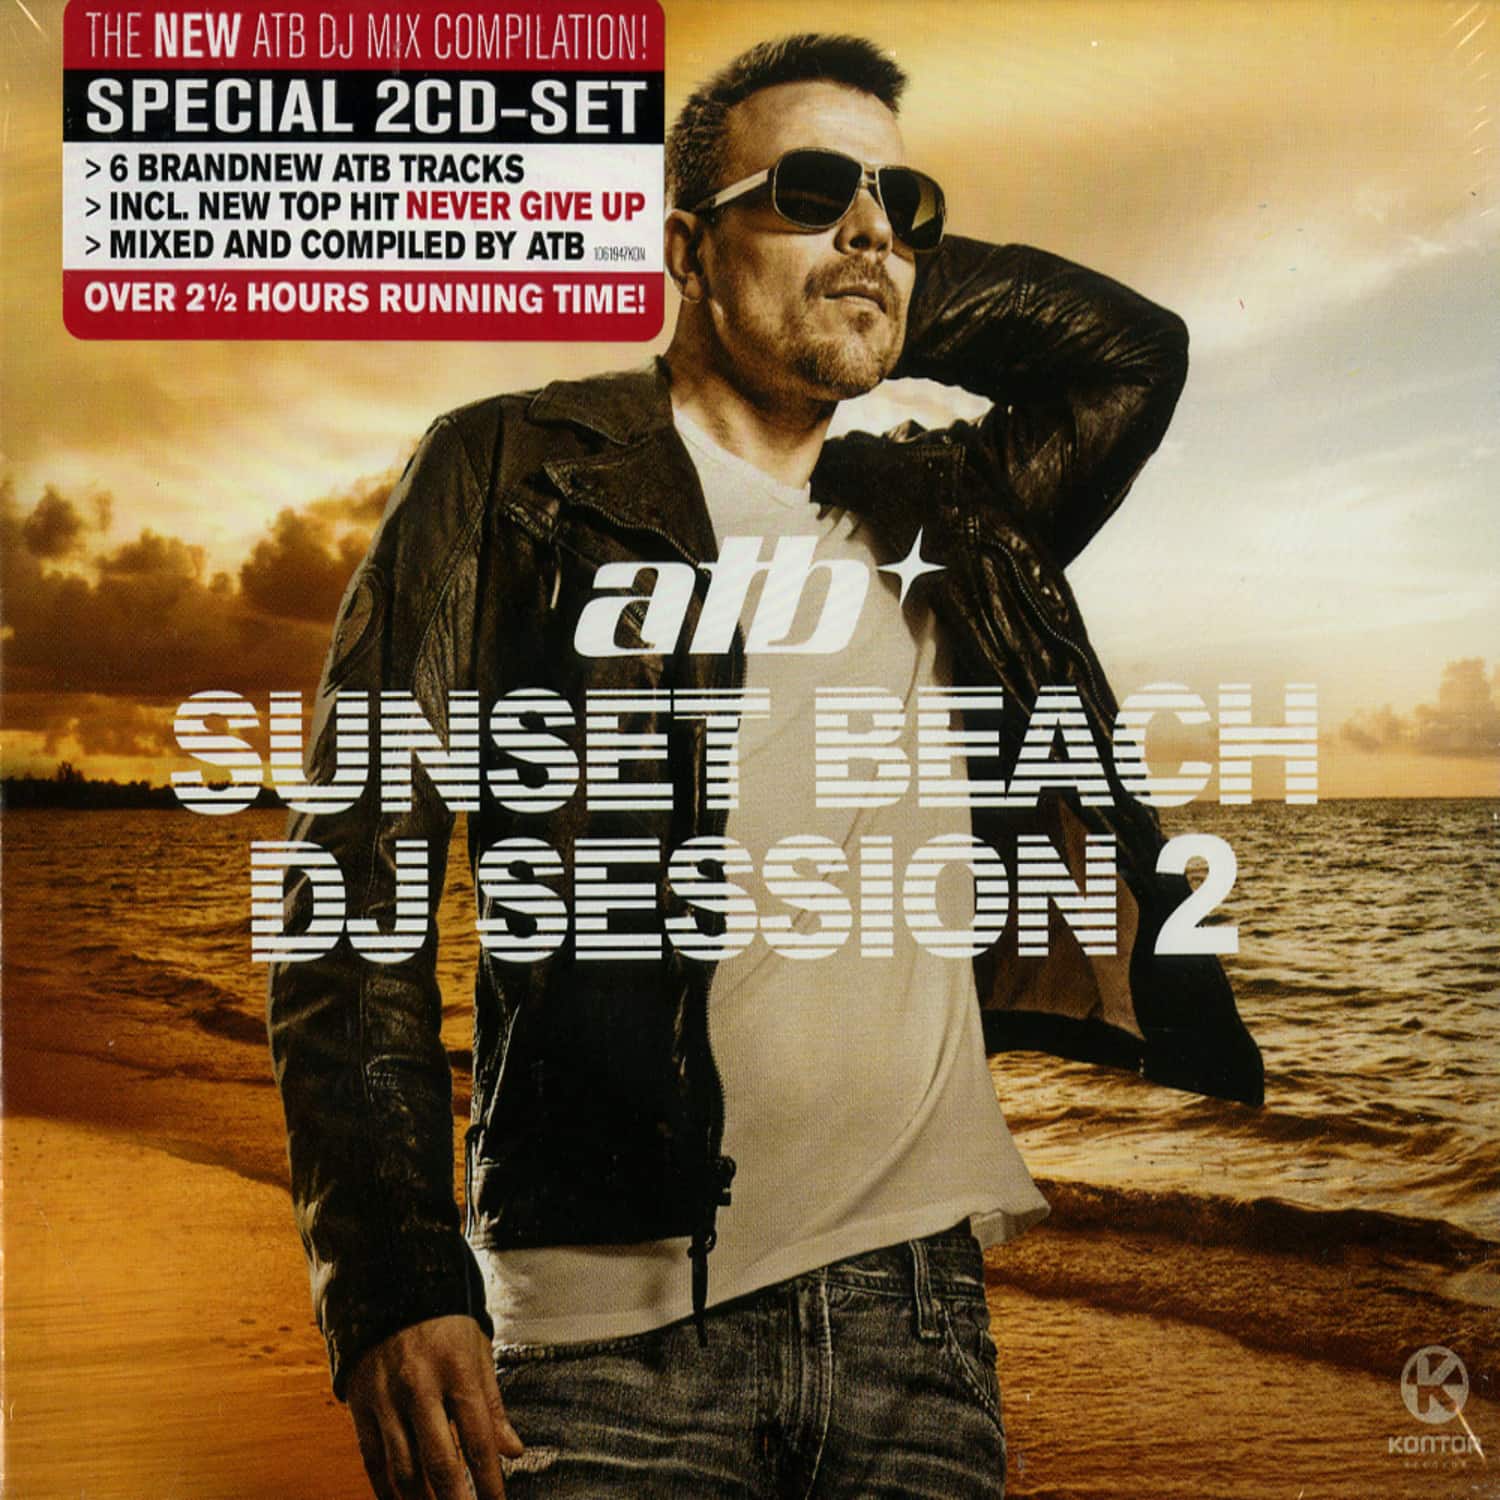 ATB - SUNSET BEACH DJ SESSION 2 